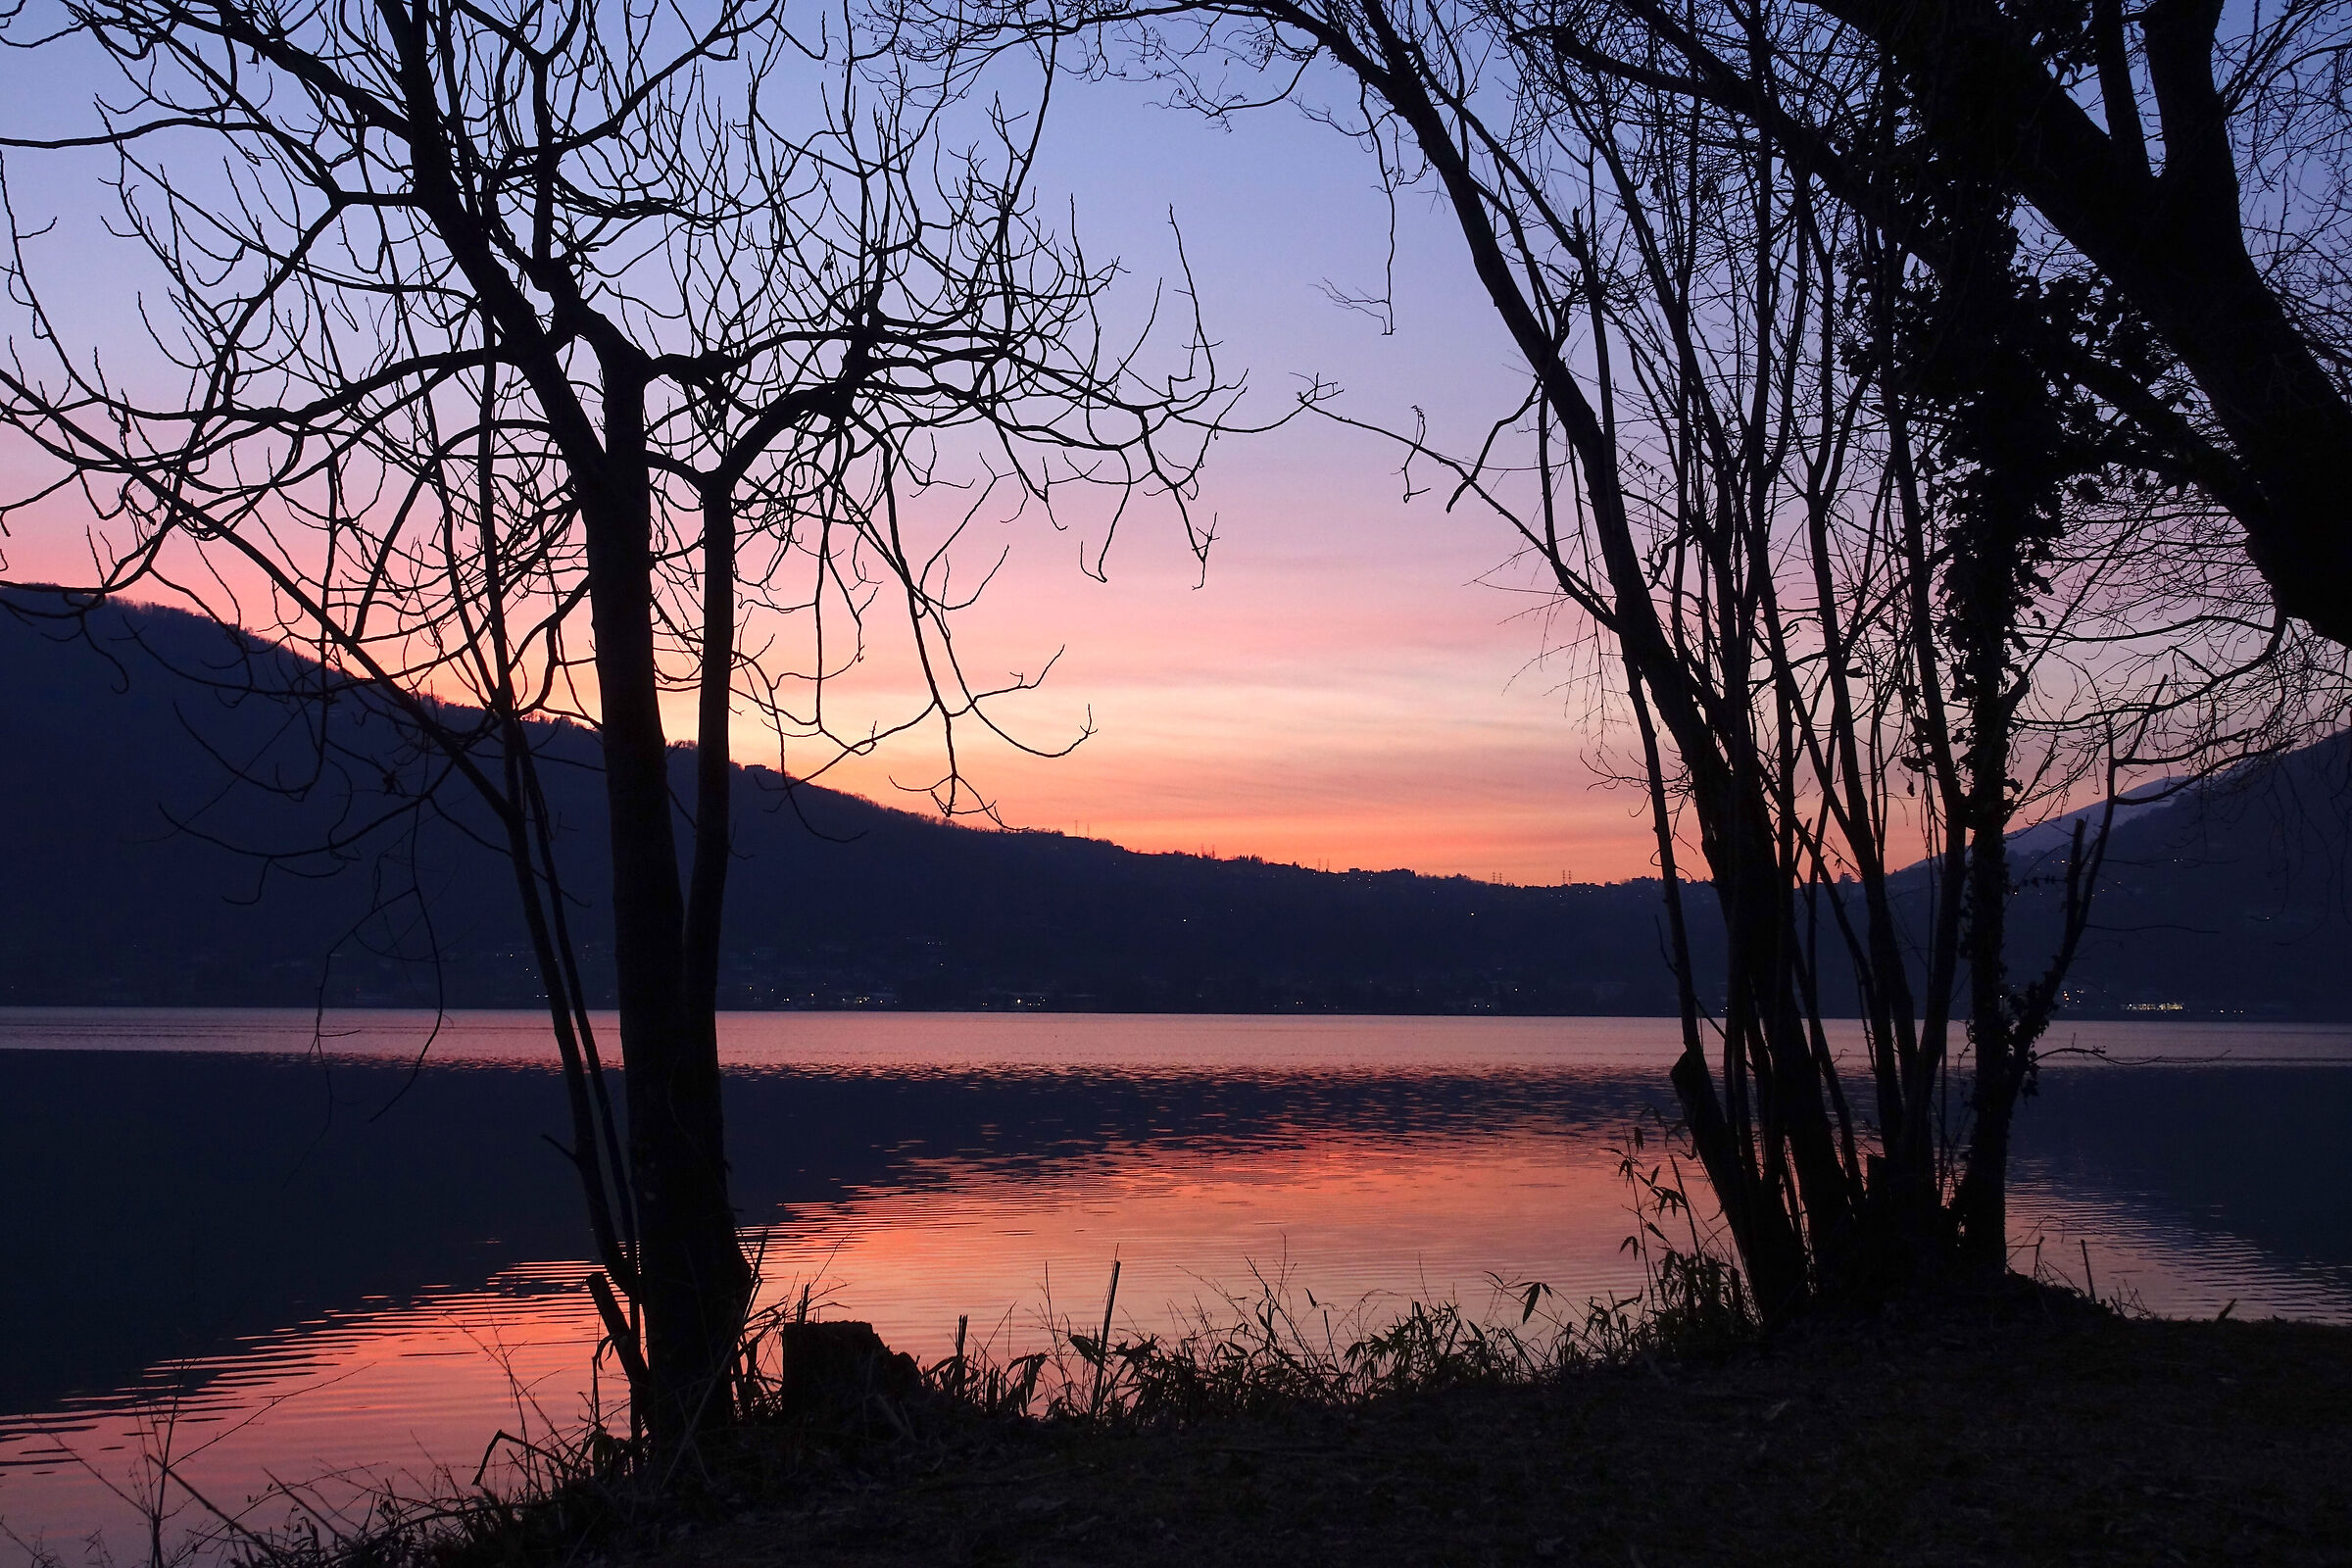 Winter sunset on Lake Garlate 2...